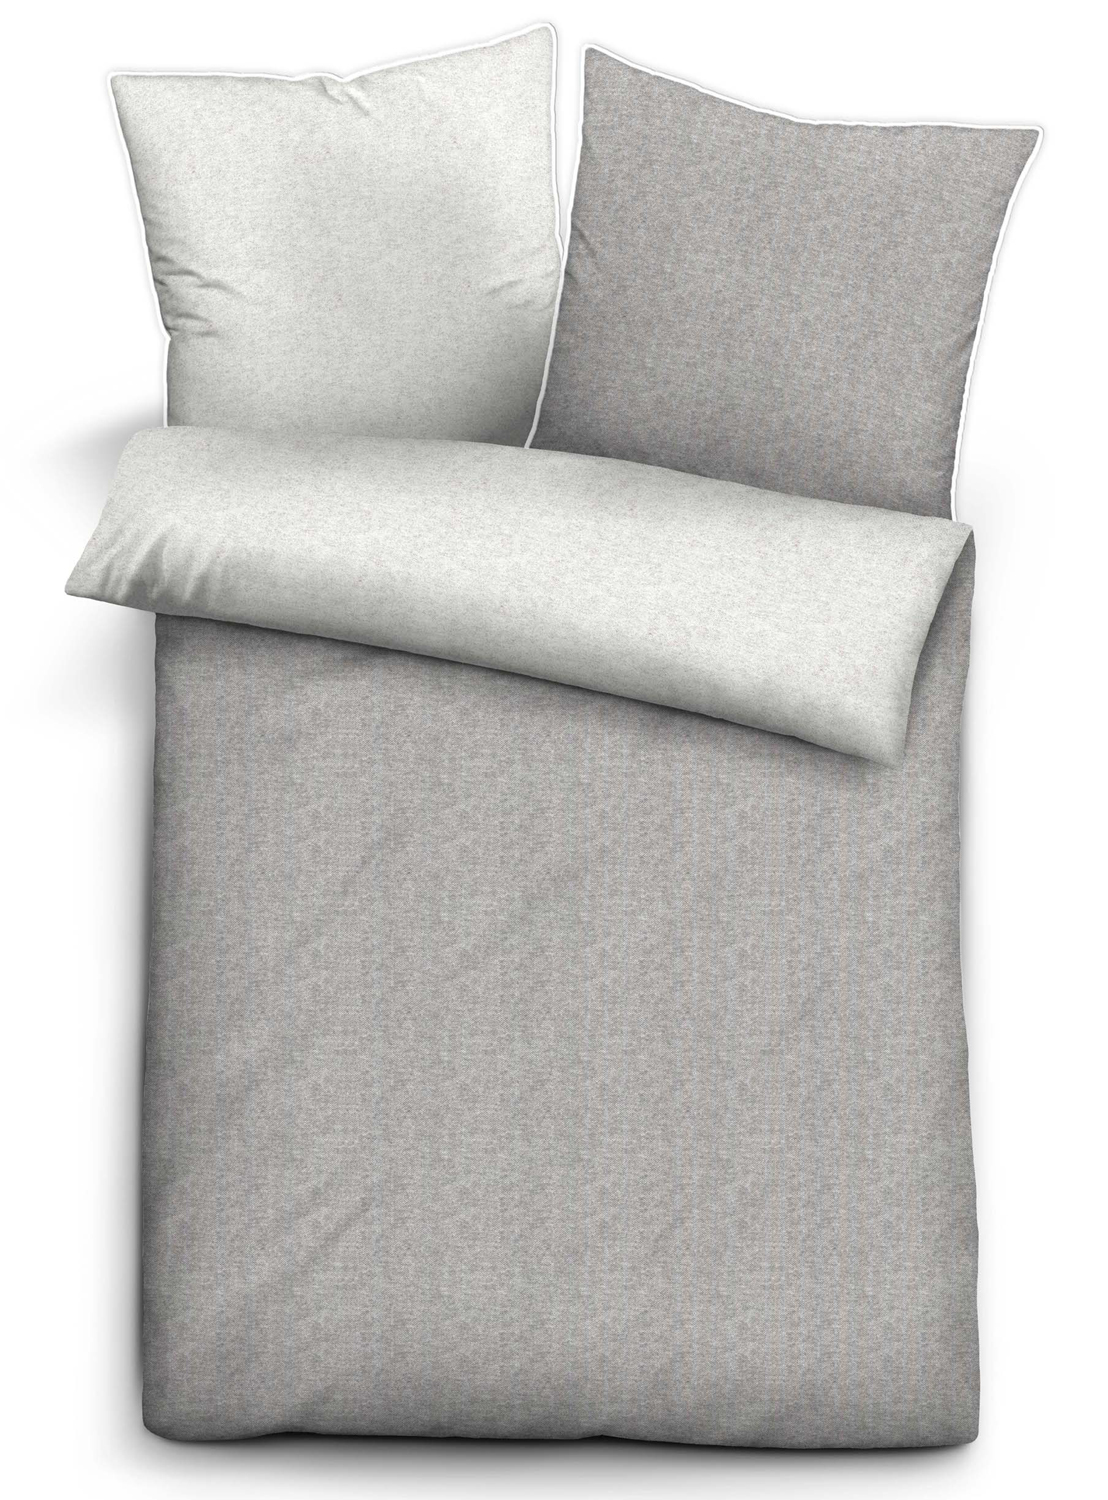 Biberna Linon Bettwäsche Set 135x200cm 100% Baumwolle Reißverschluss grau/weiß